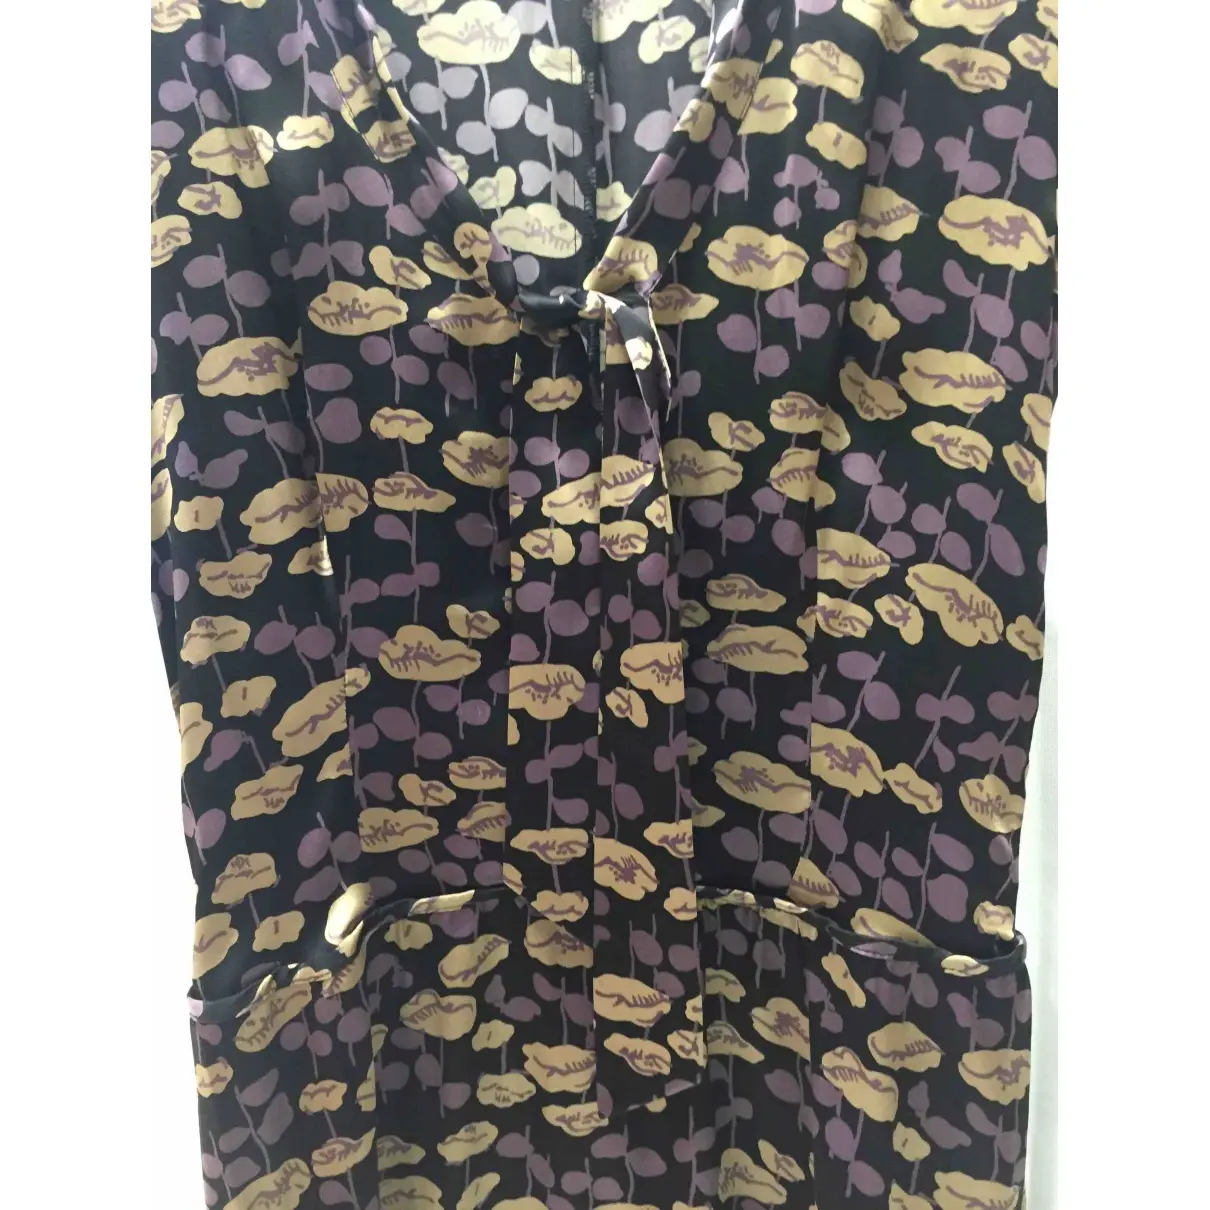 Buy Tara Jarmon Silk mid-length dress online